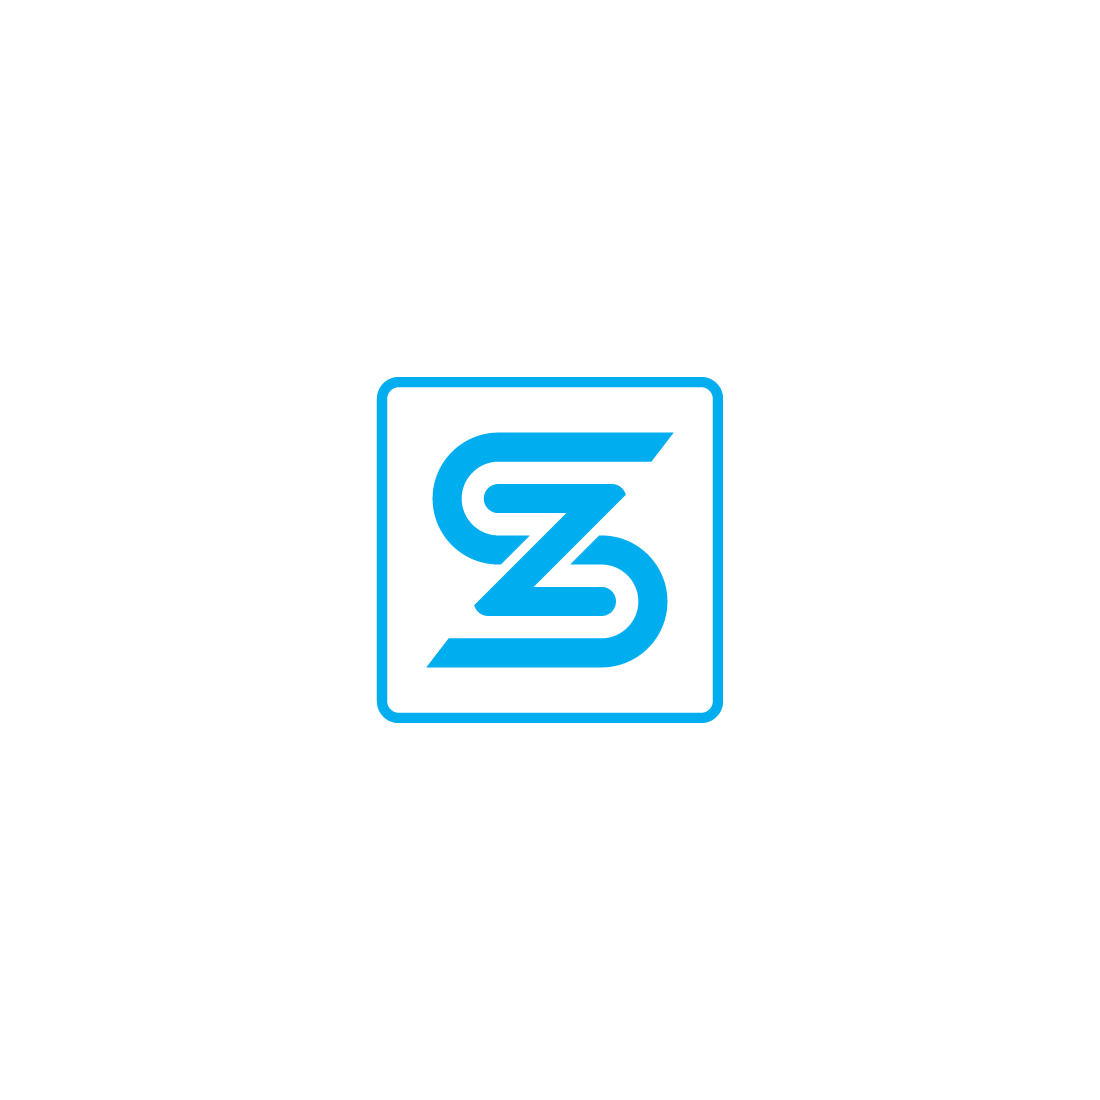 SZ Letter Mark Logo Design cover image.